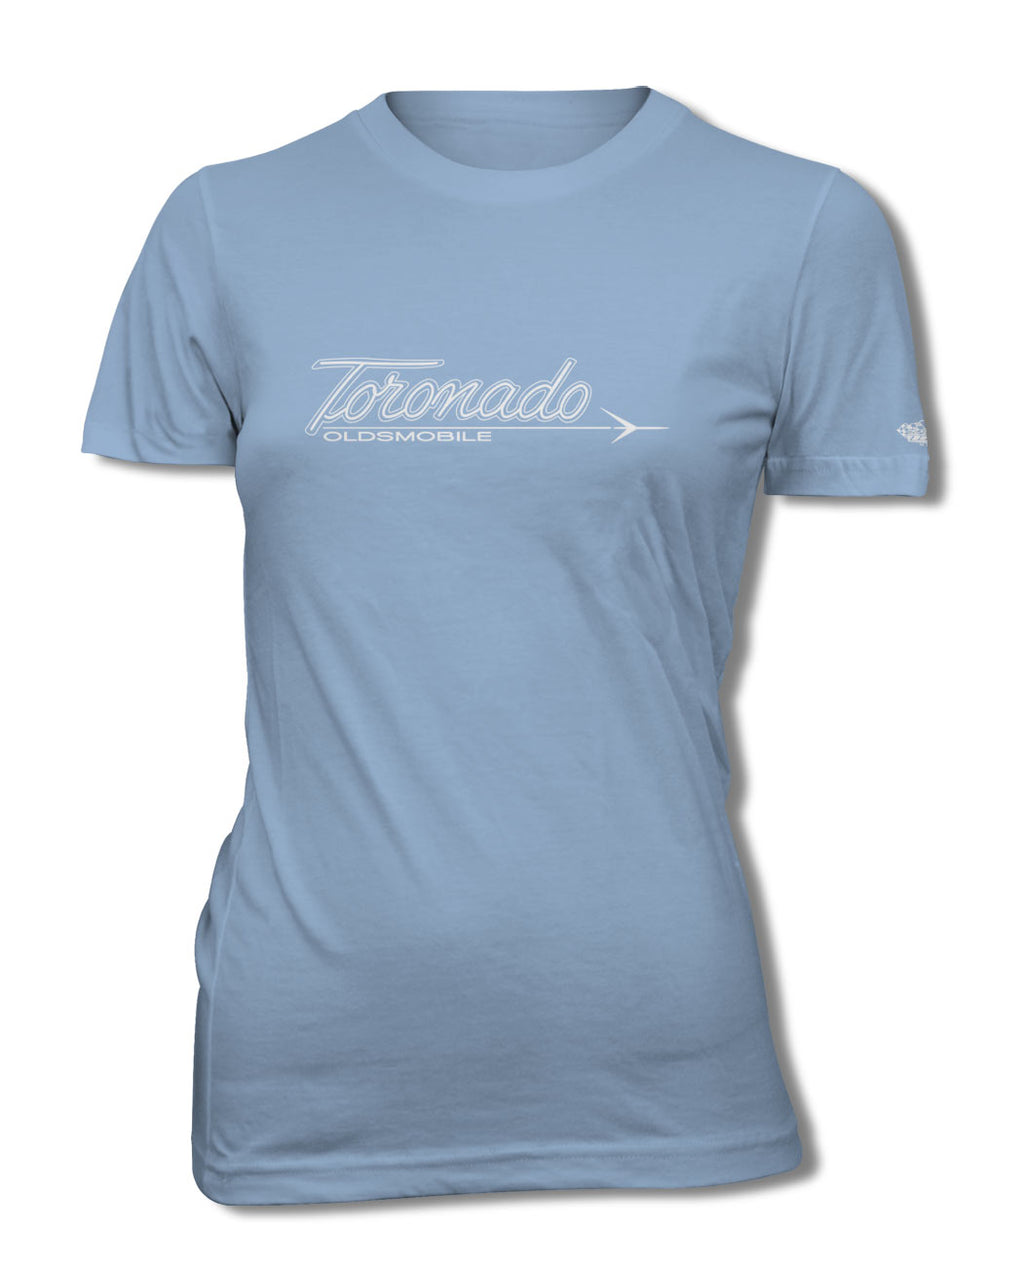 Oldsmobile Toronado 1966 - 1967 Emblem - T-Shirt Women - Vintage Emblem